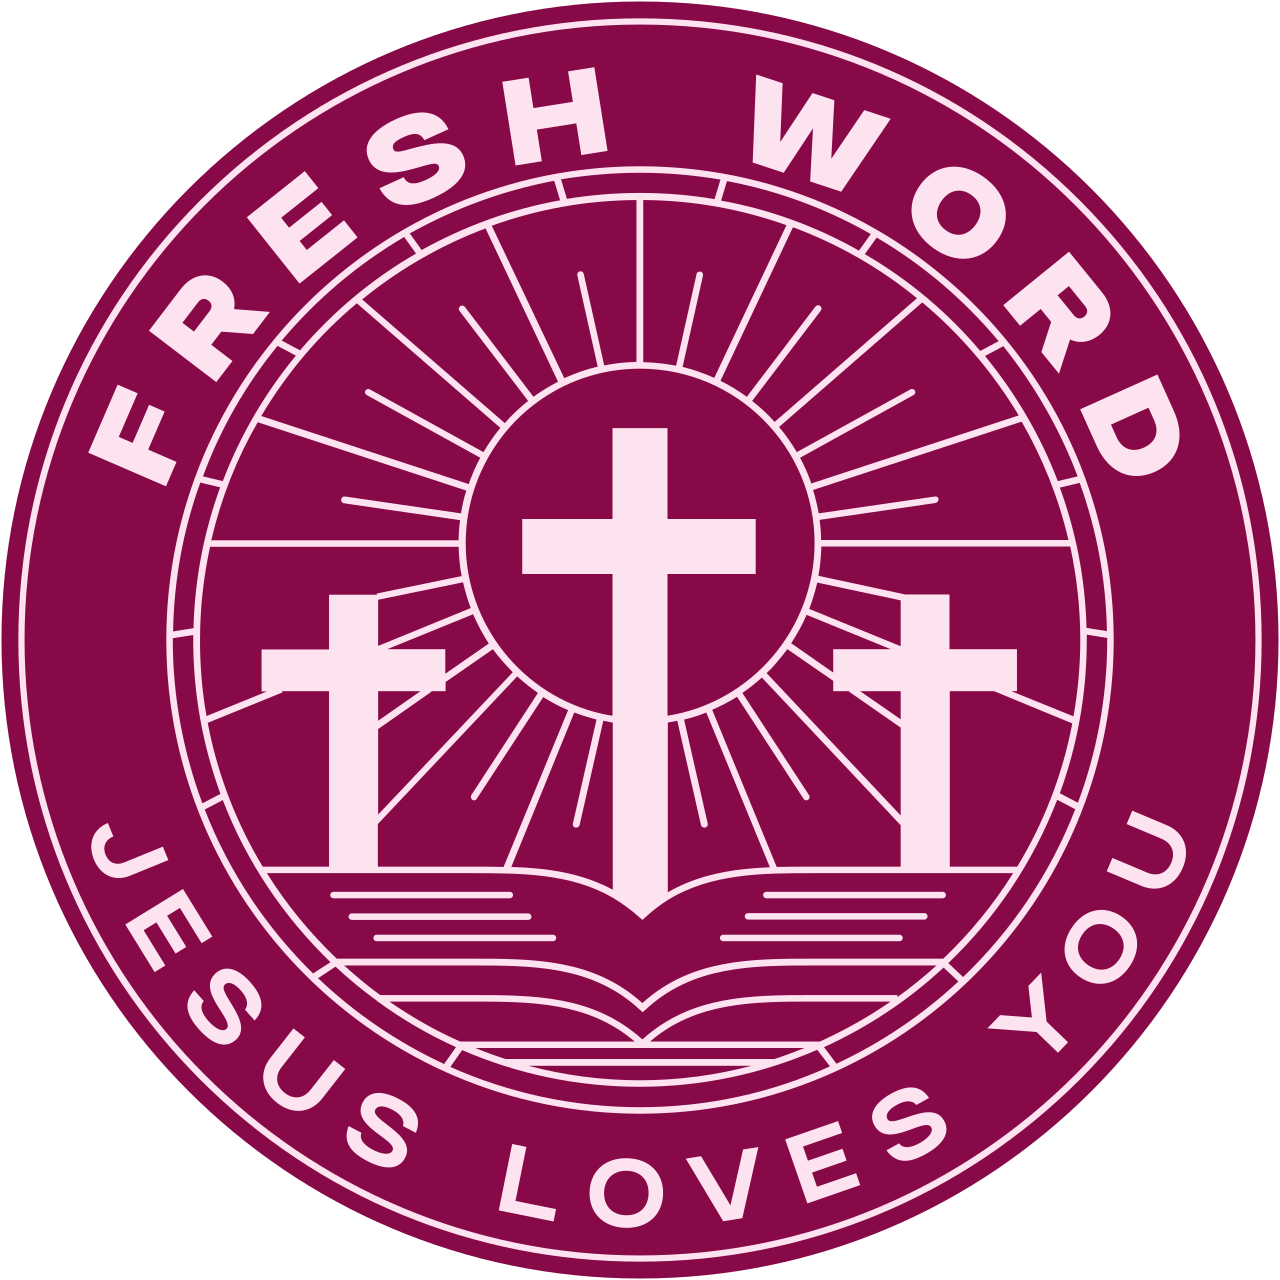 Fresh Word's logo